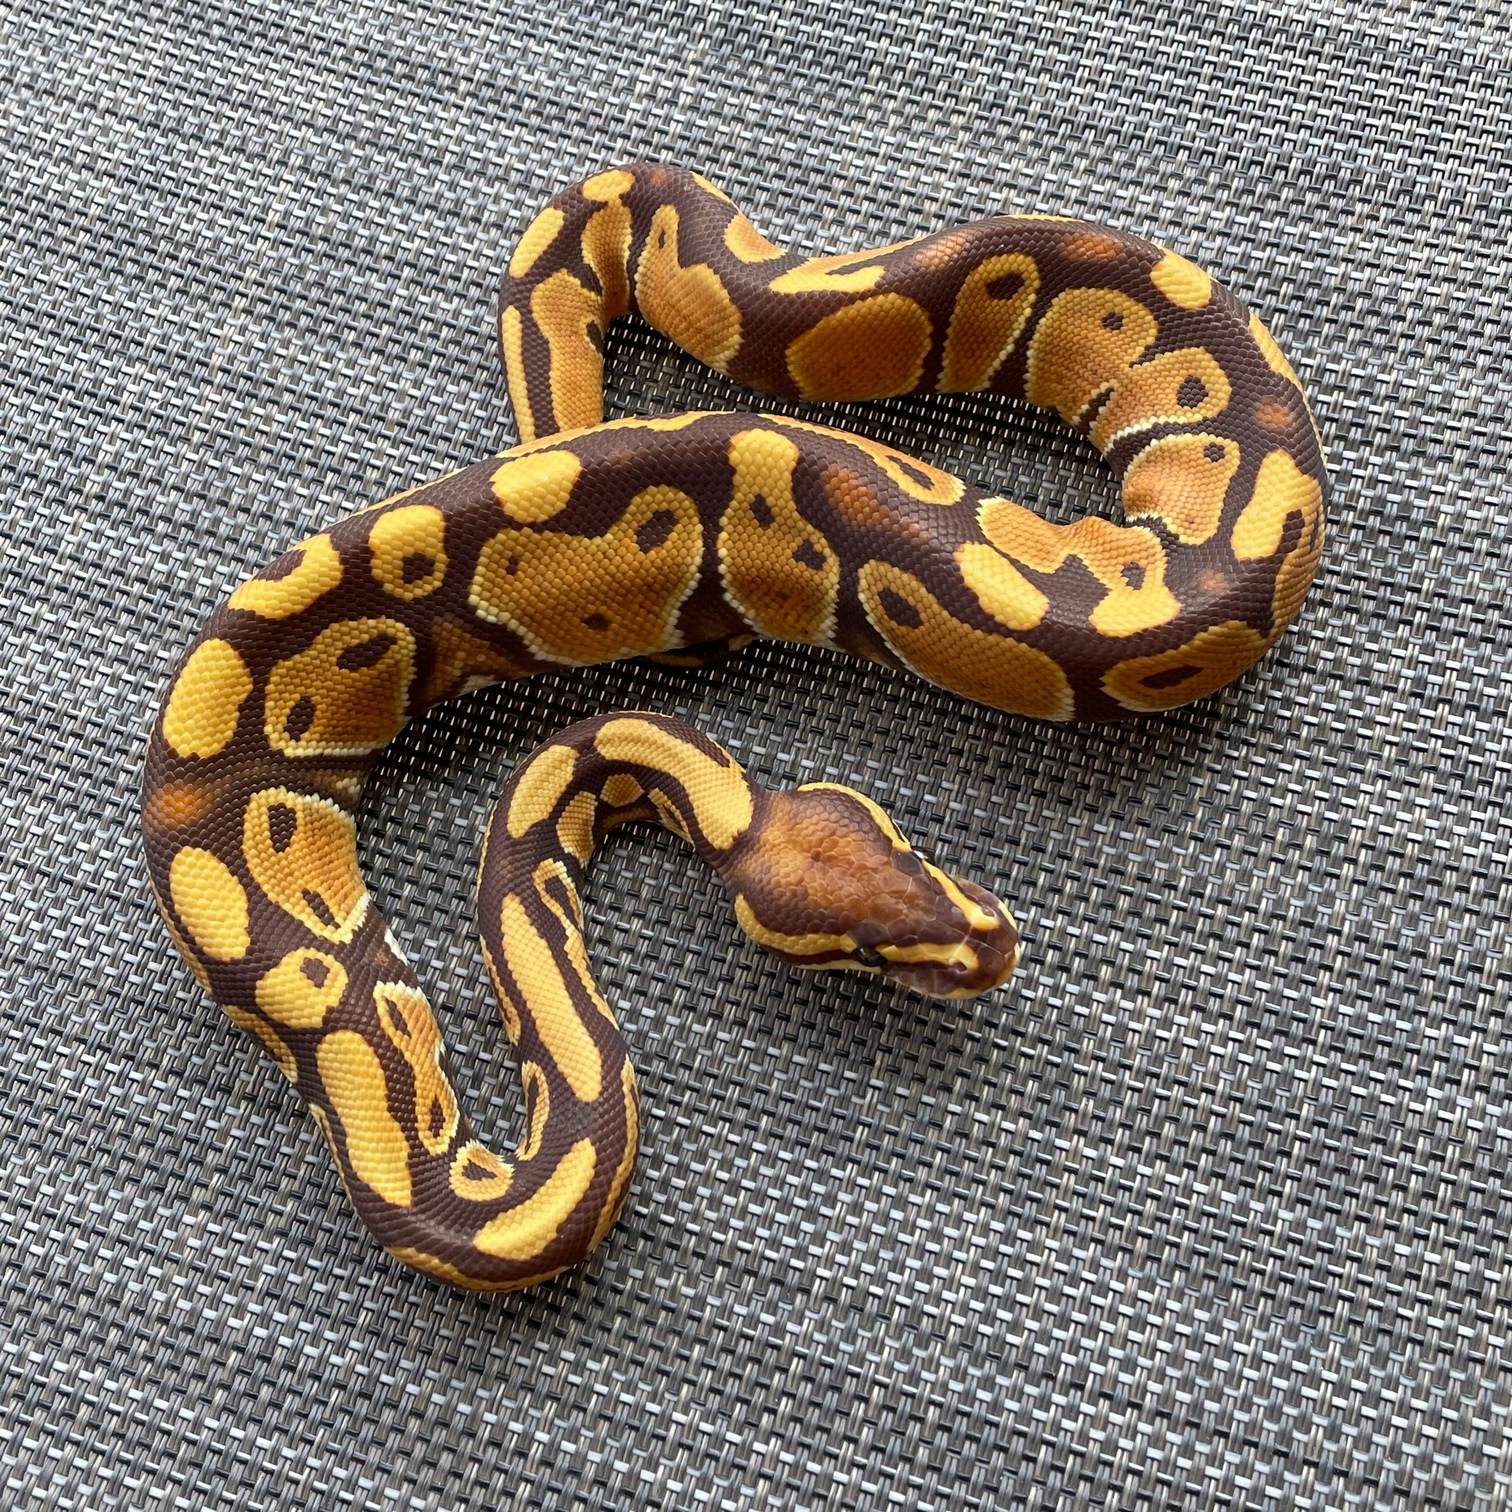 Monarch Ball Python by MSB Reptiles